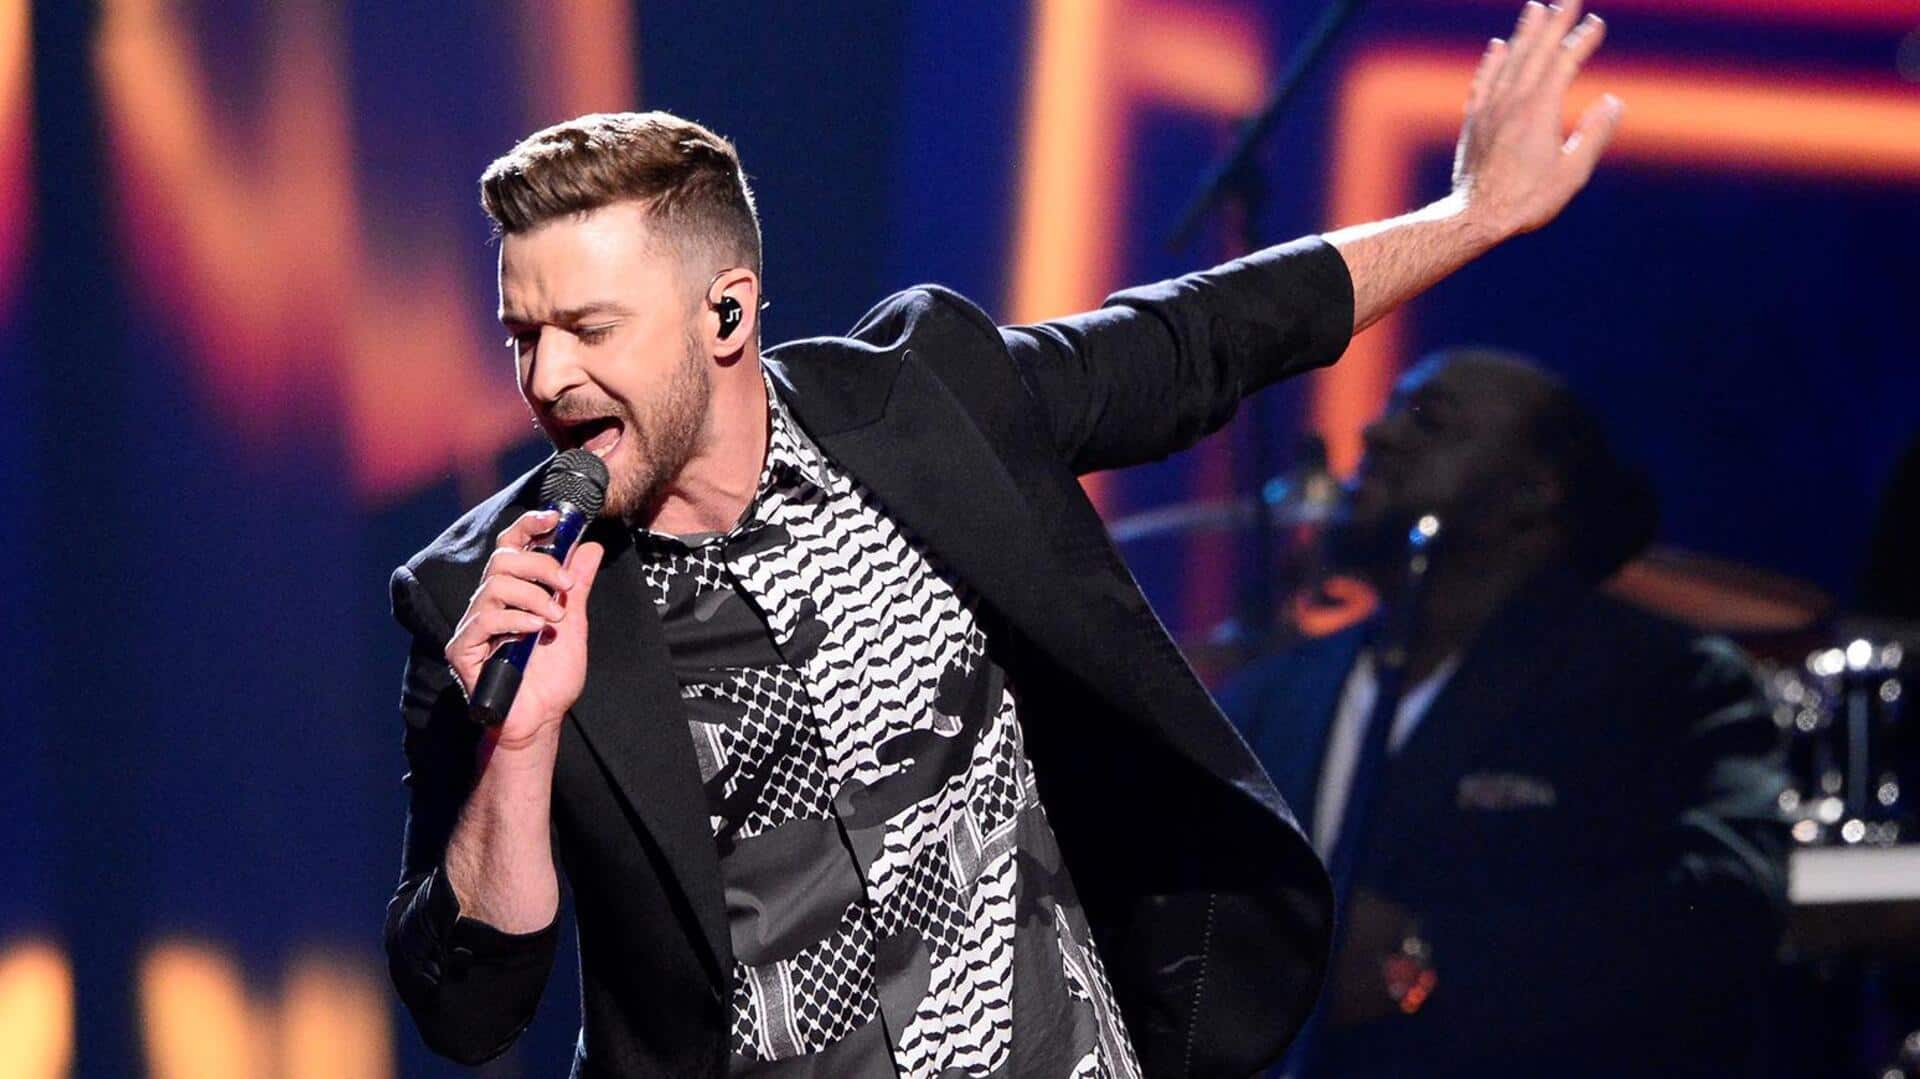 'Anyone driving tonight?': Justin Timberlake's DWI arrest joke raises eyebrows 